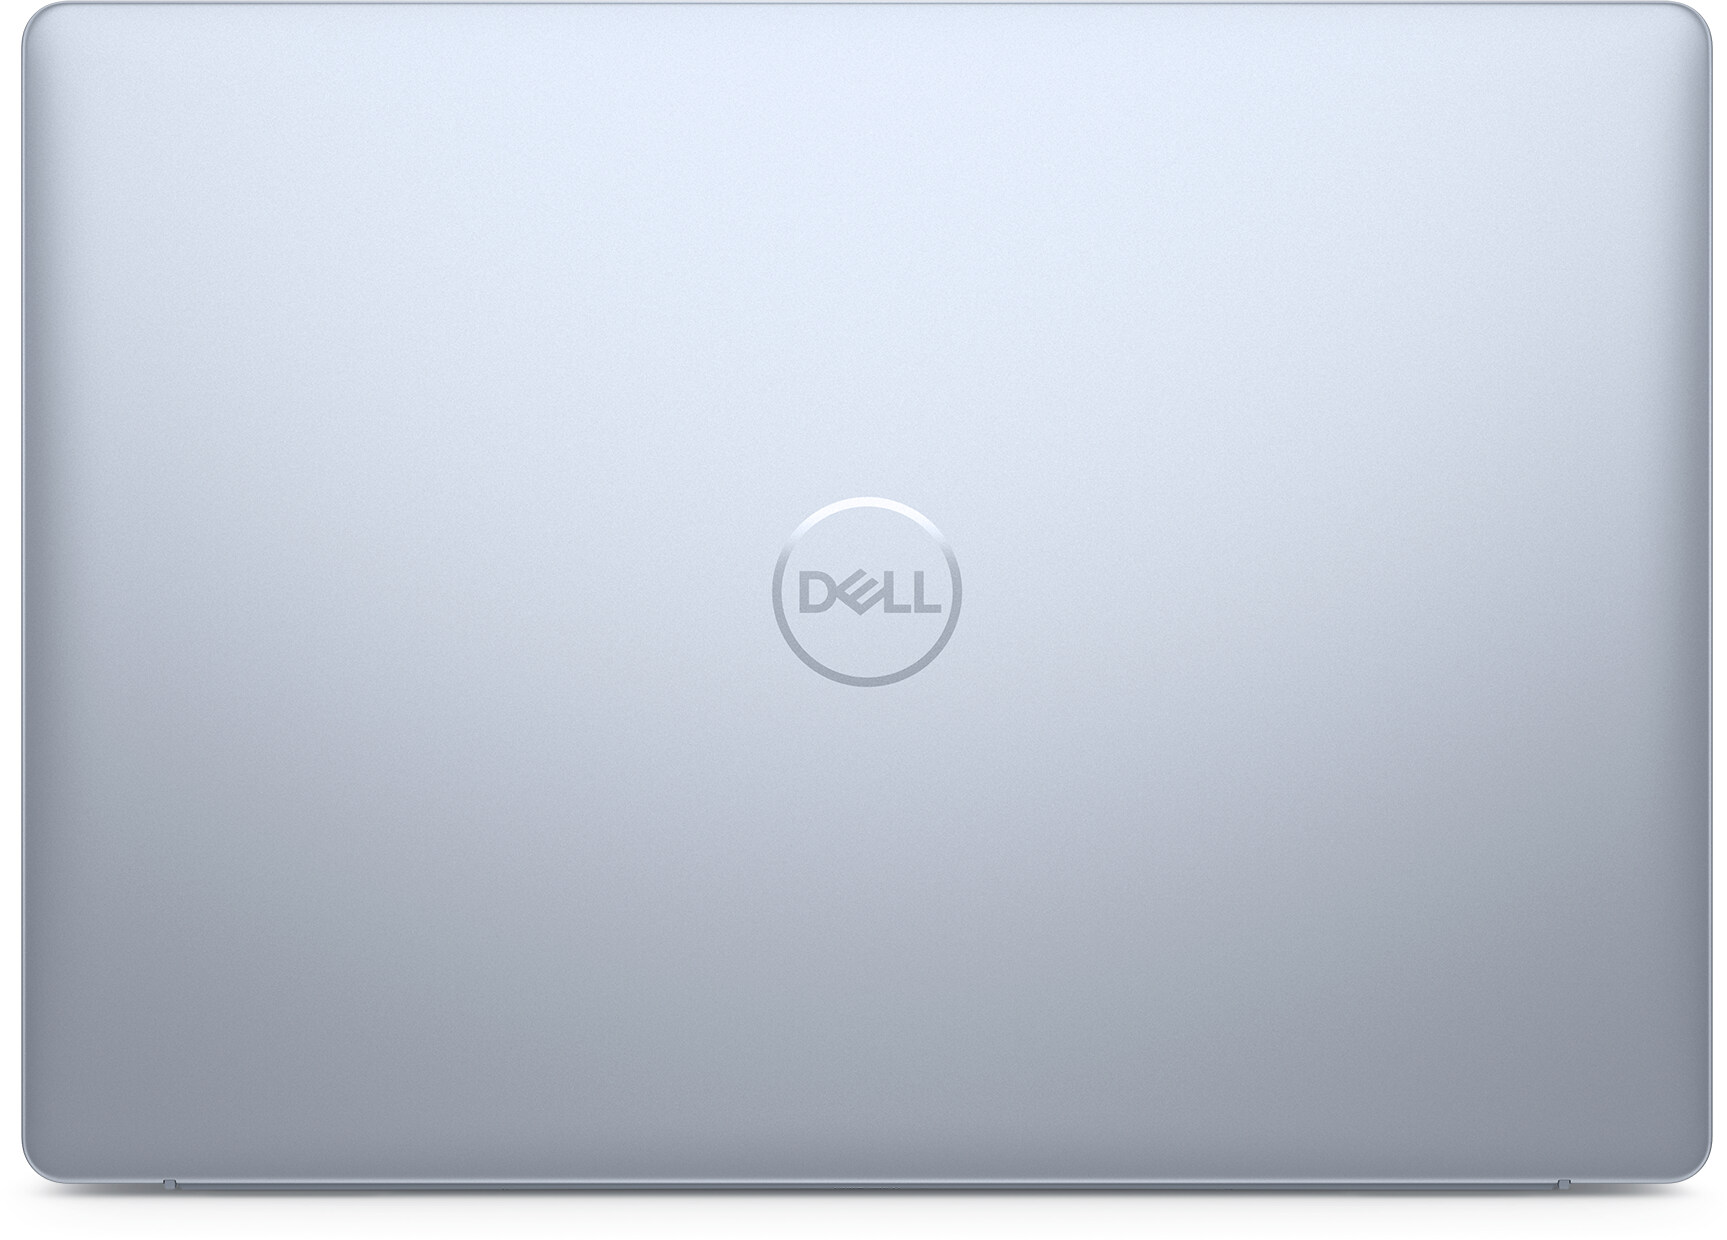 Dell 16 inch Inspiron Laptop AMD | Dell USA